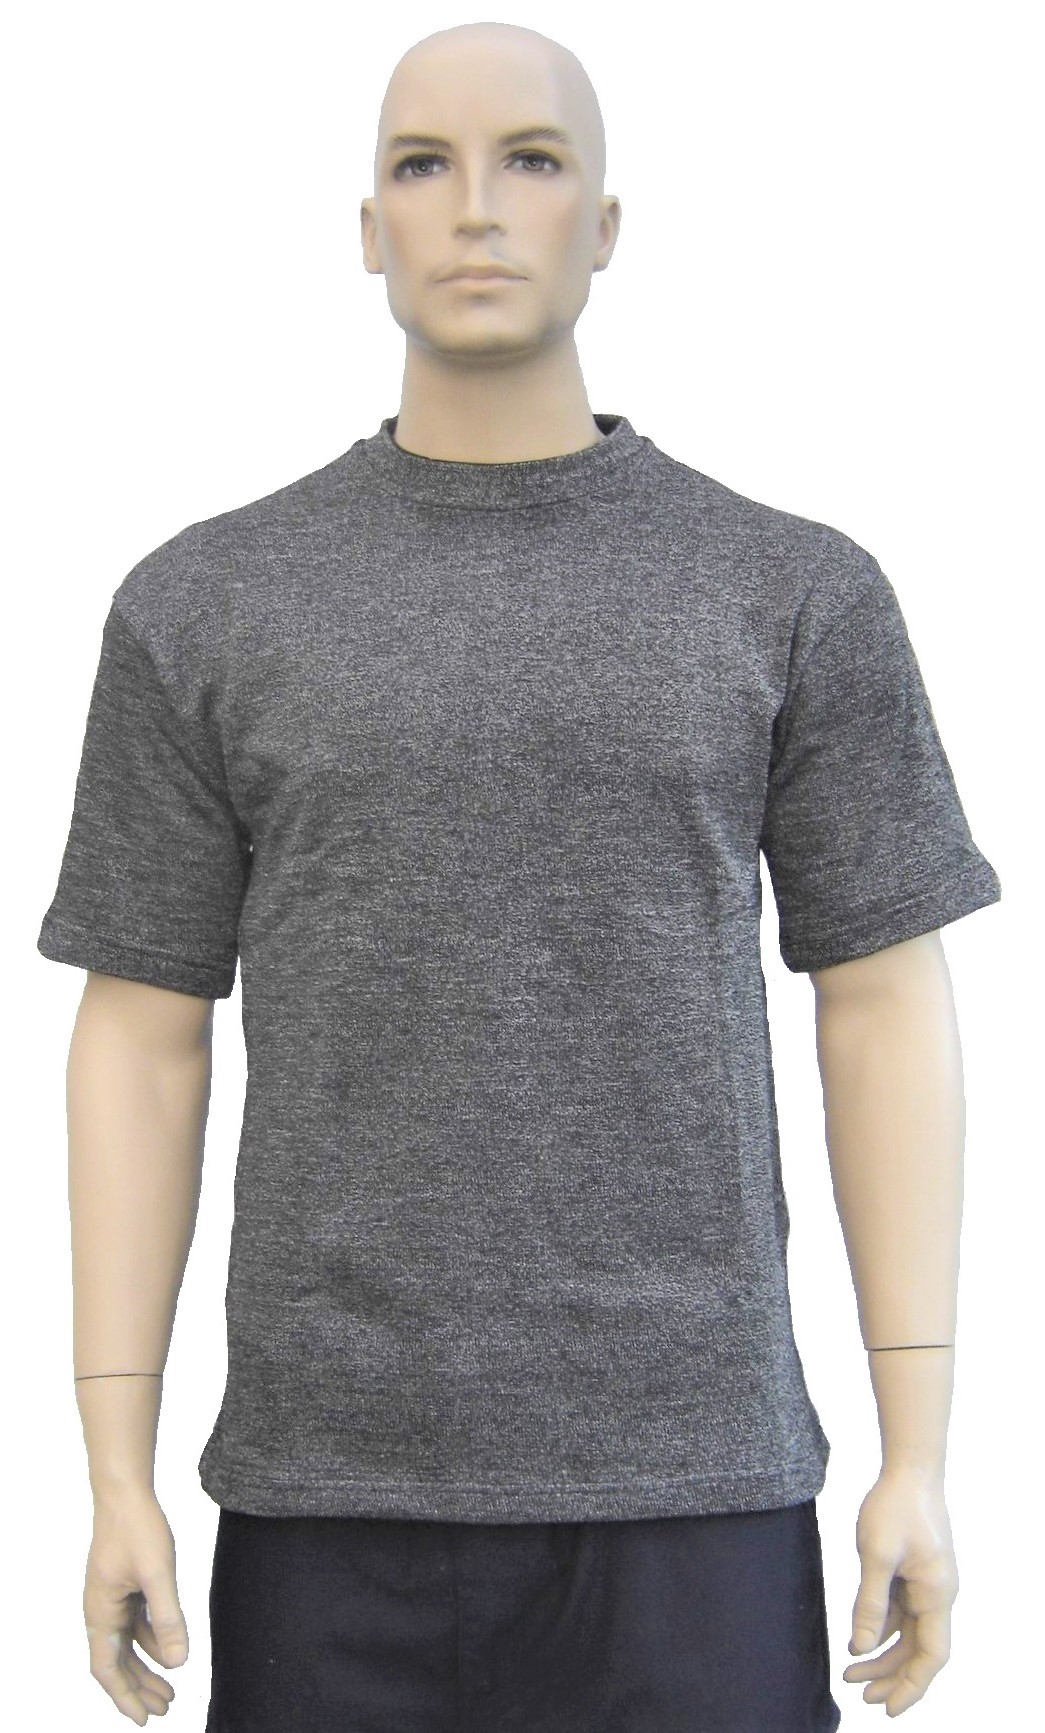 Gray cut resistant T-shirt - undershirt